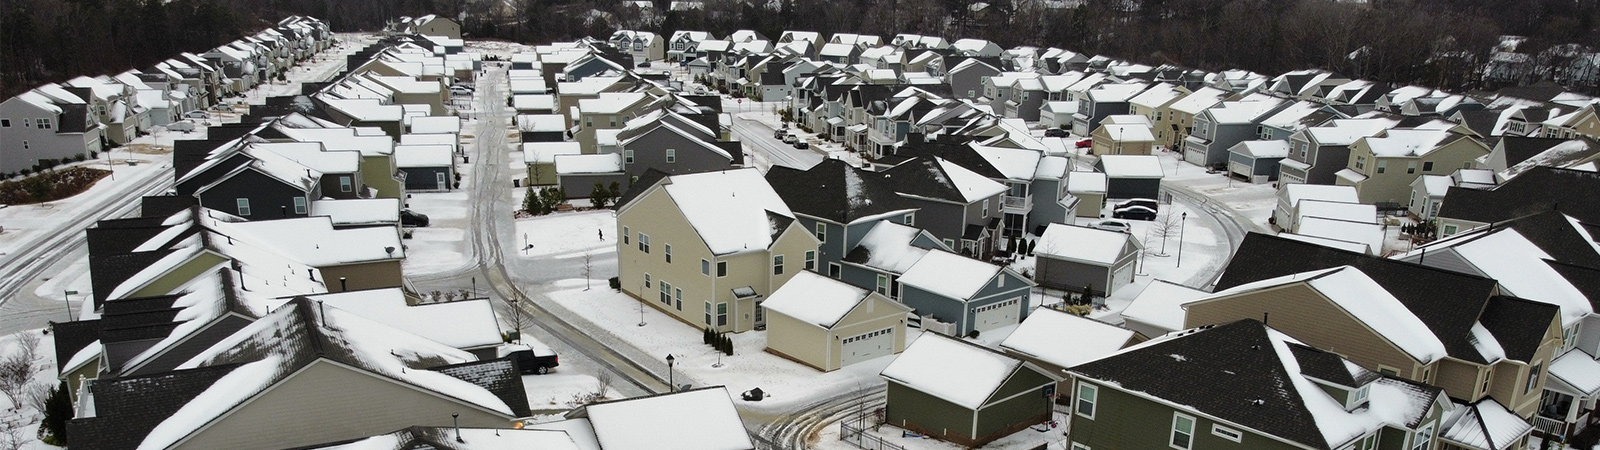 aerial view of Minnesota neighborhood